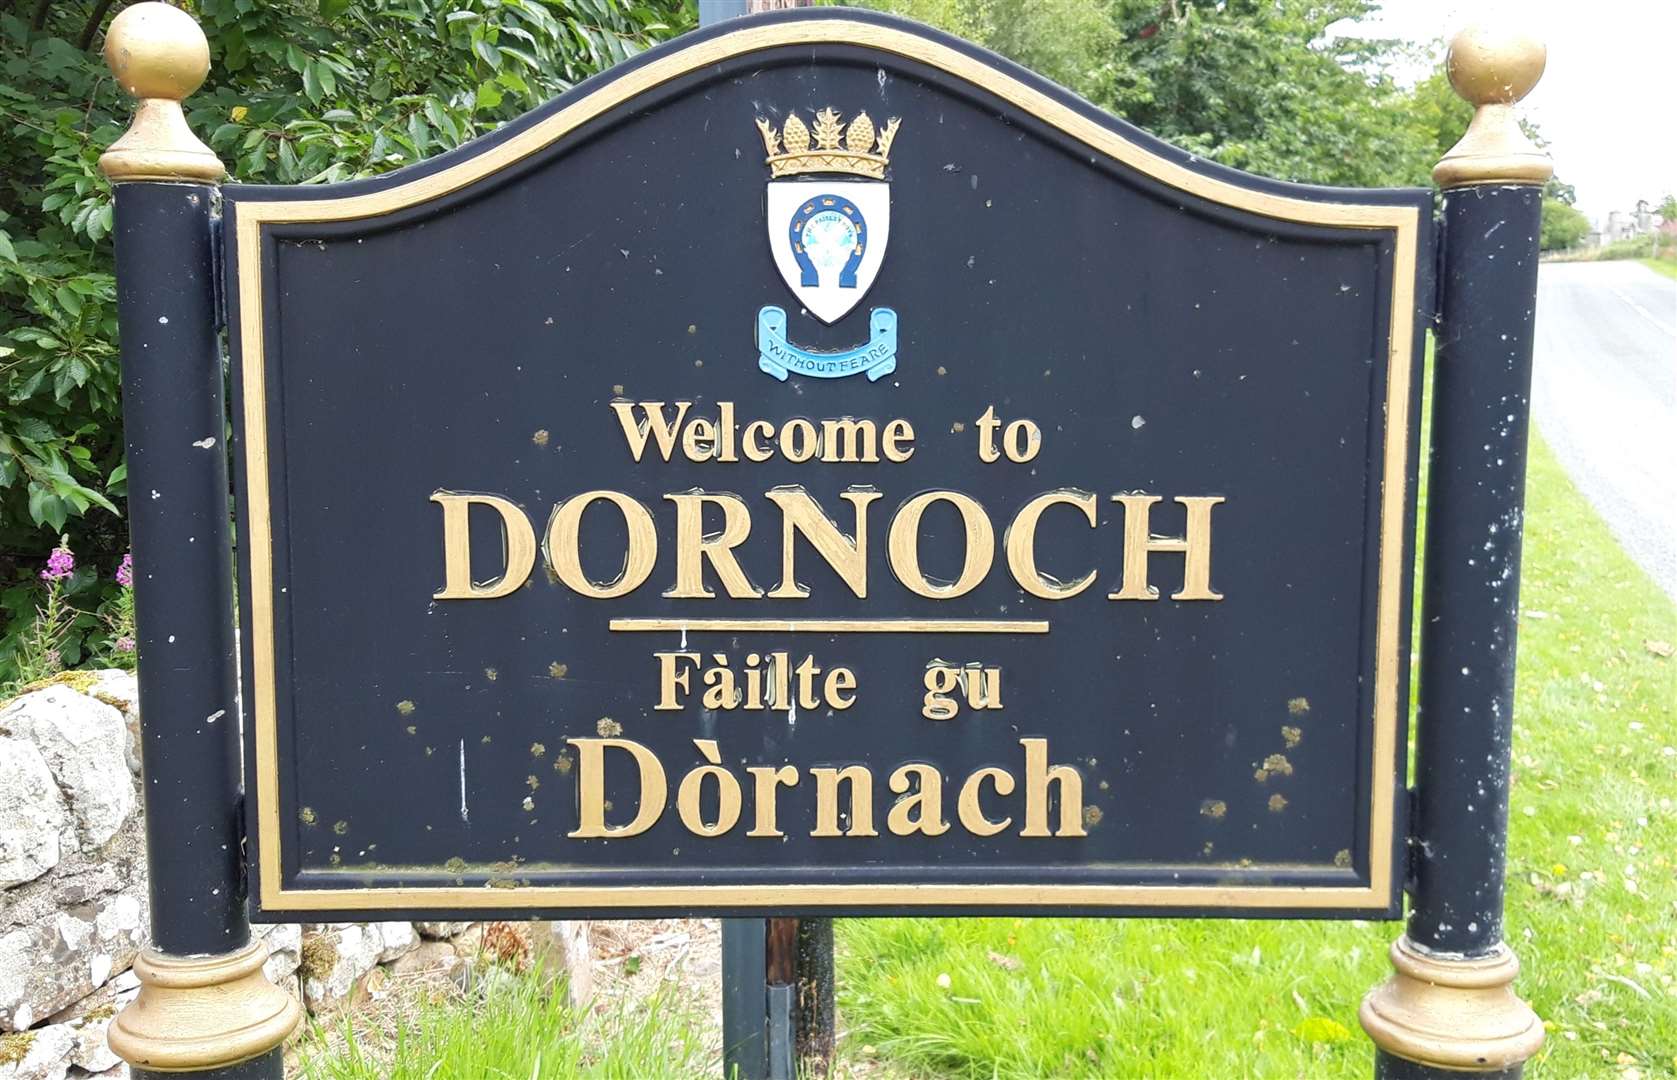 The Dornoch BID votes were counted today.